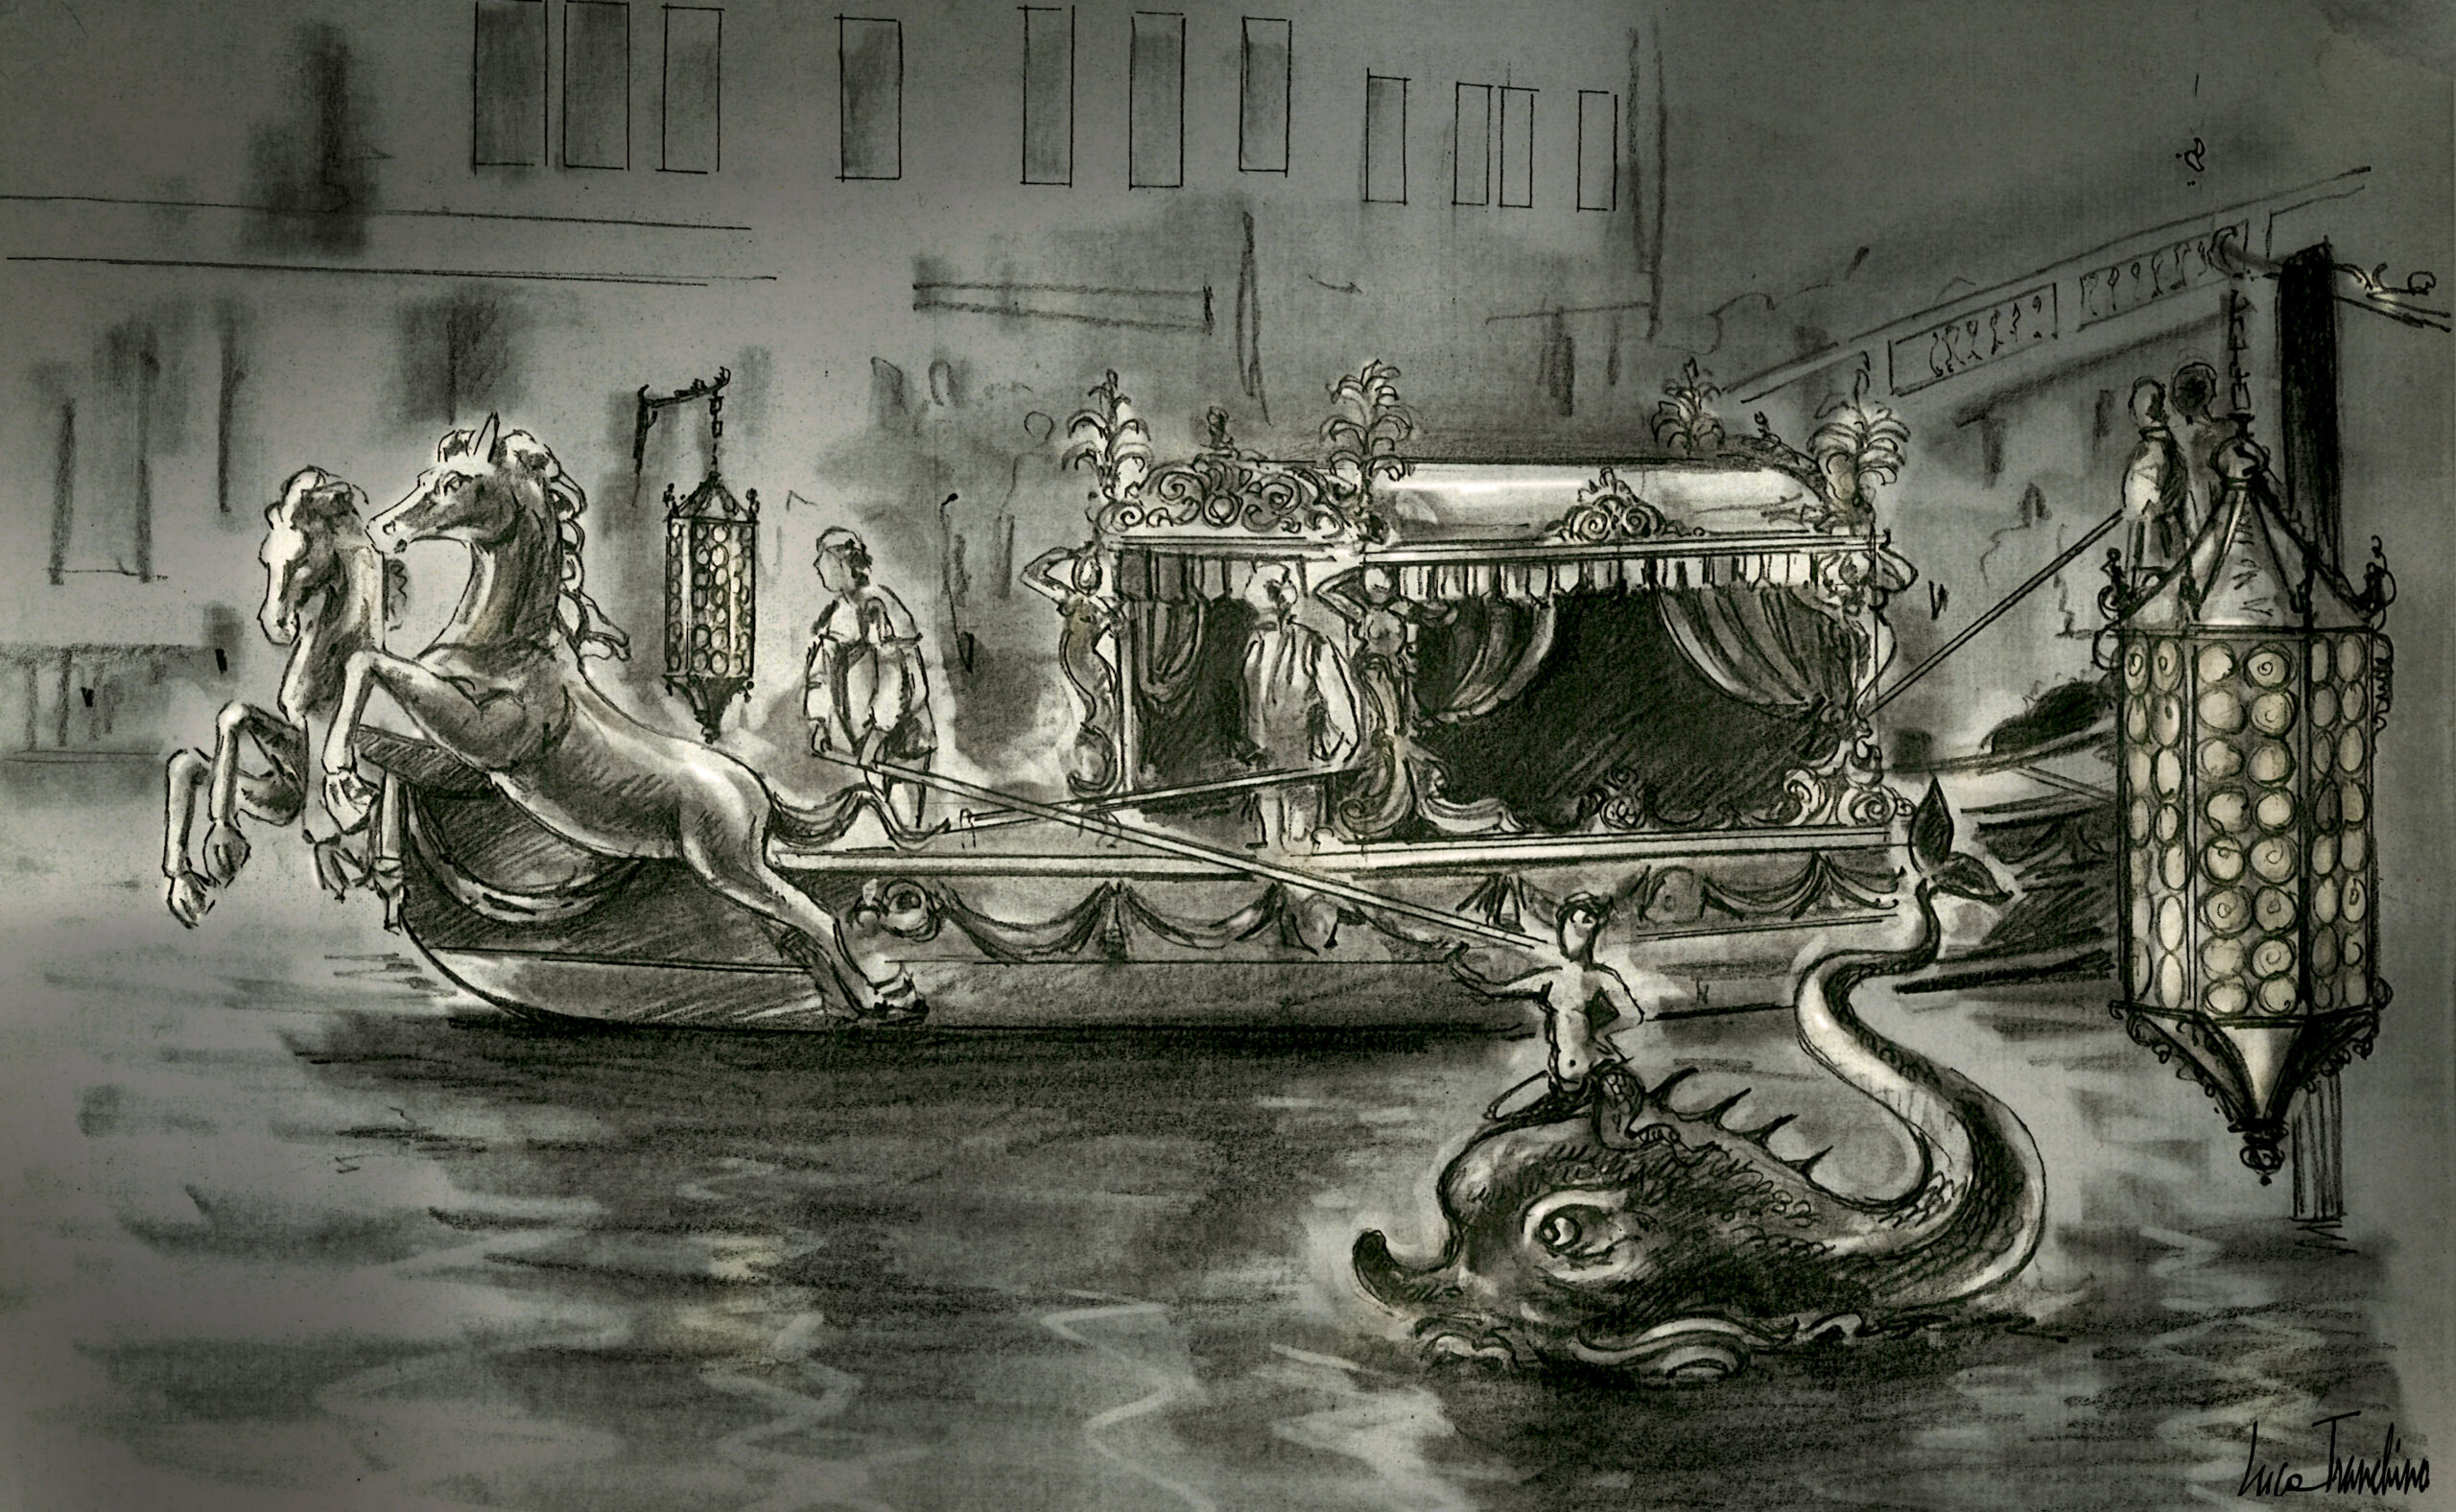 CASANOVA - Directed by Lasse Hallstrom - Ext. Venetian Barge, Sketch by Luca Tranchino - ©2005 - Disney